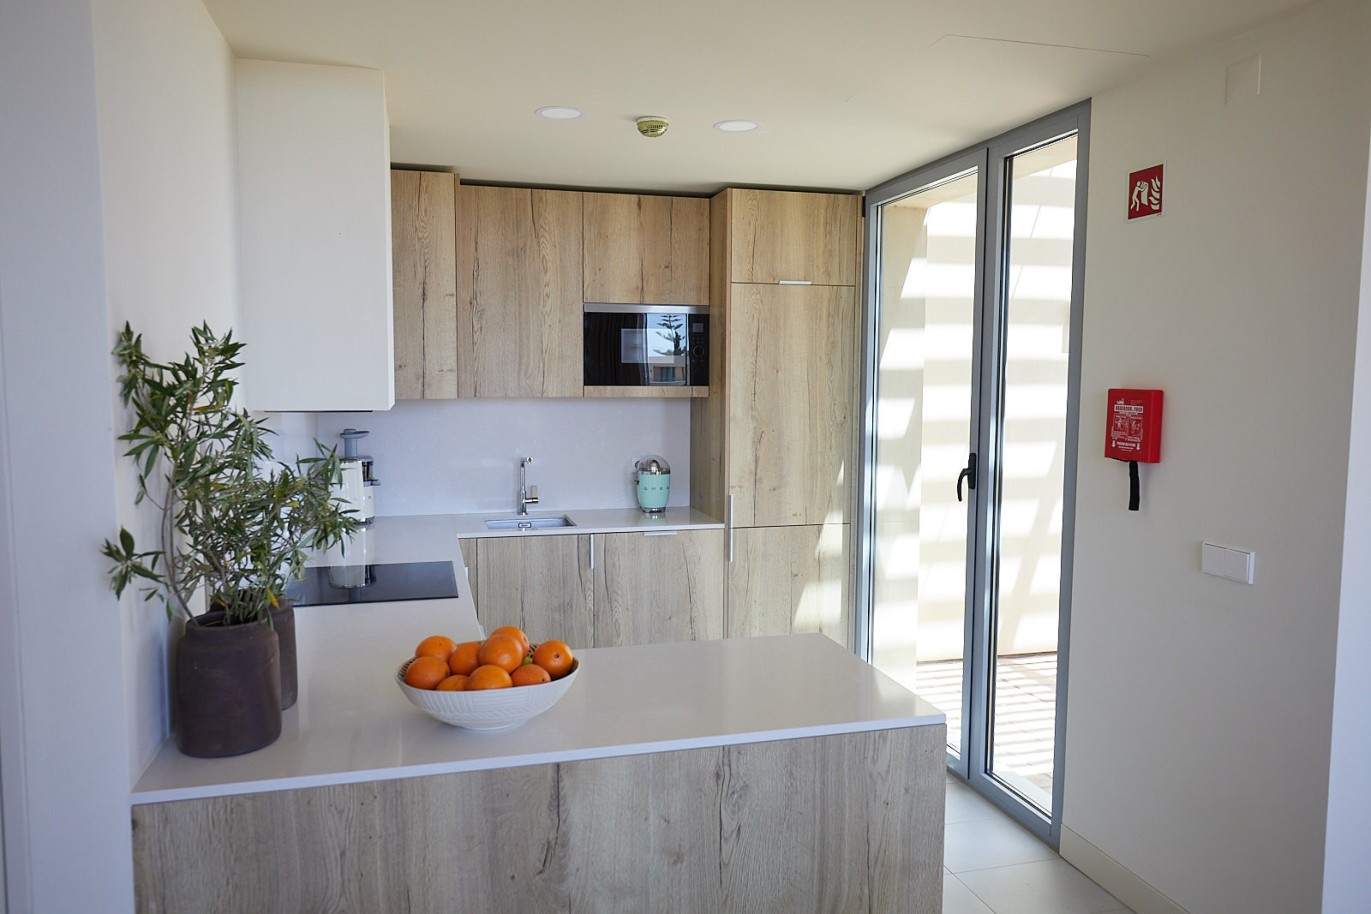 2 bedroom apartment in resort, for sale in Porches, Algarve_230502